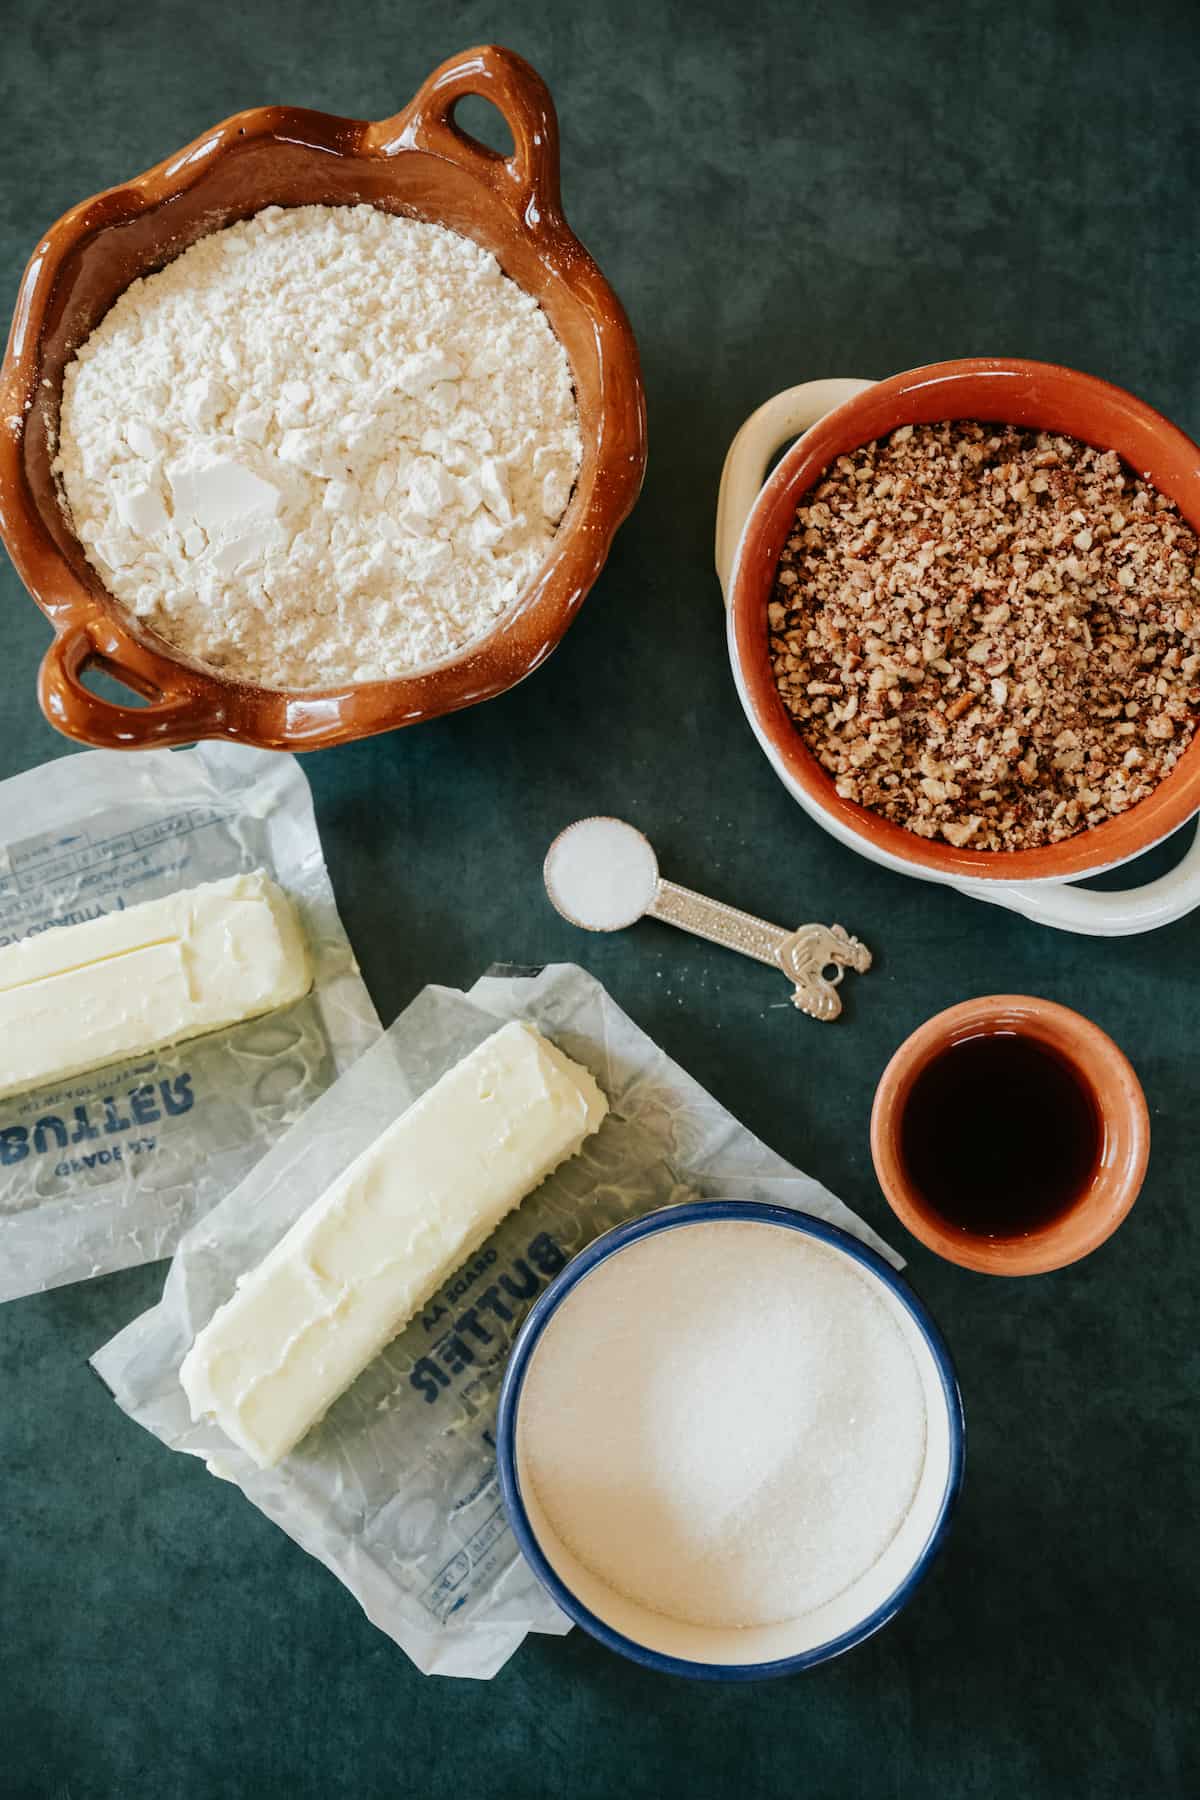 ingredients to make Polvorones Cookies (Mexican Wedding Cookies) - flour, pecans, butter, vanilla extract, salt, and sugar.